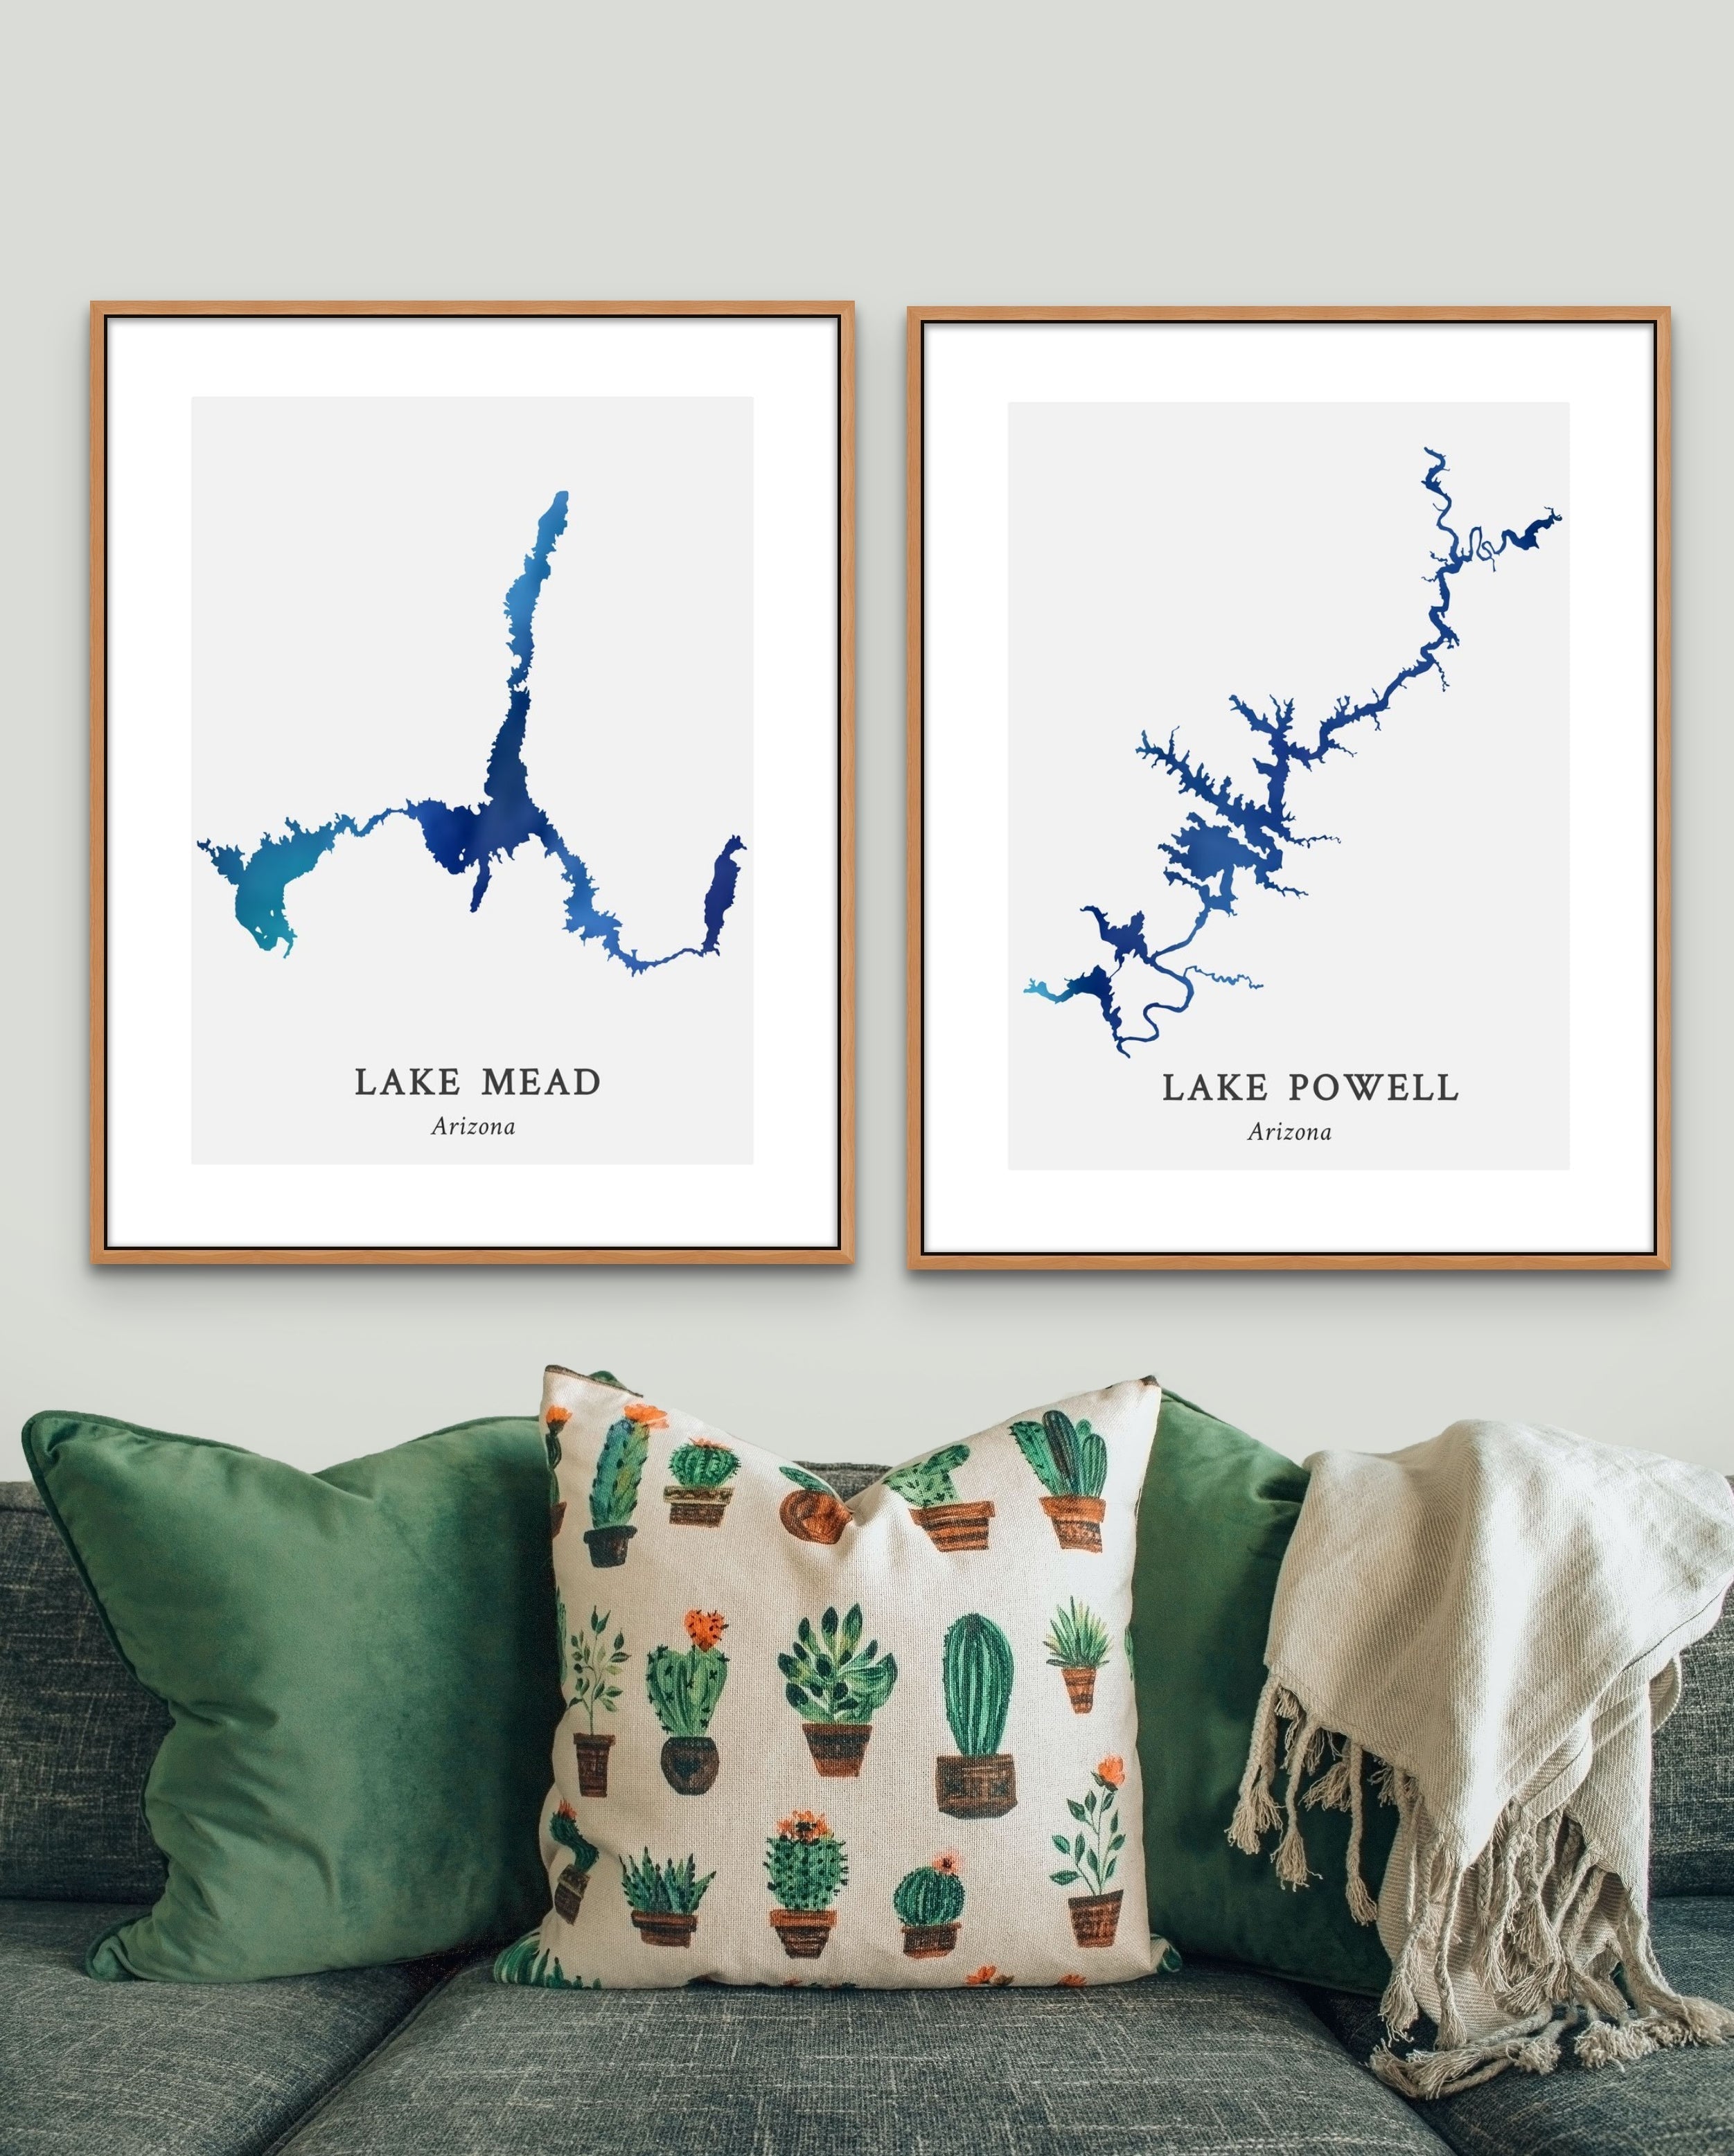 New York - Lake George Map